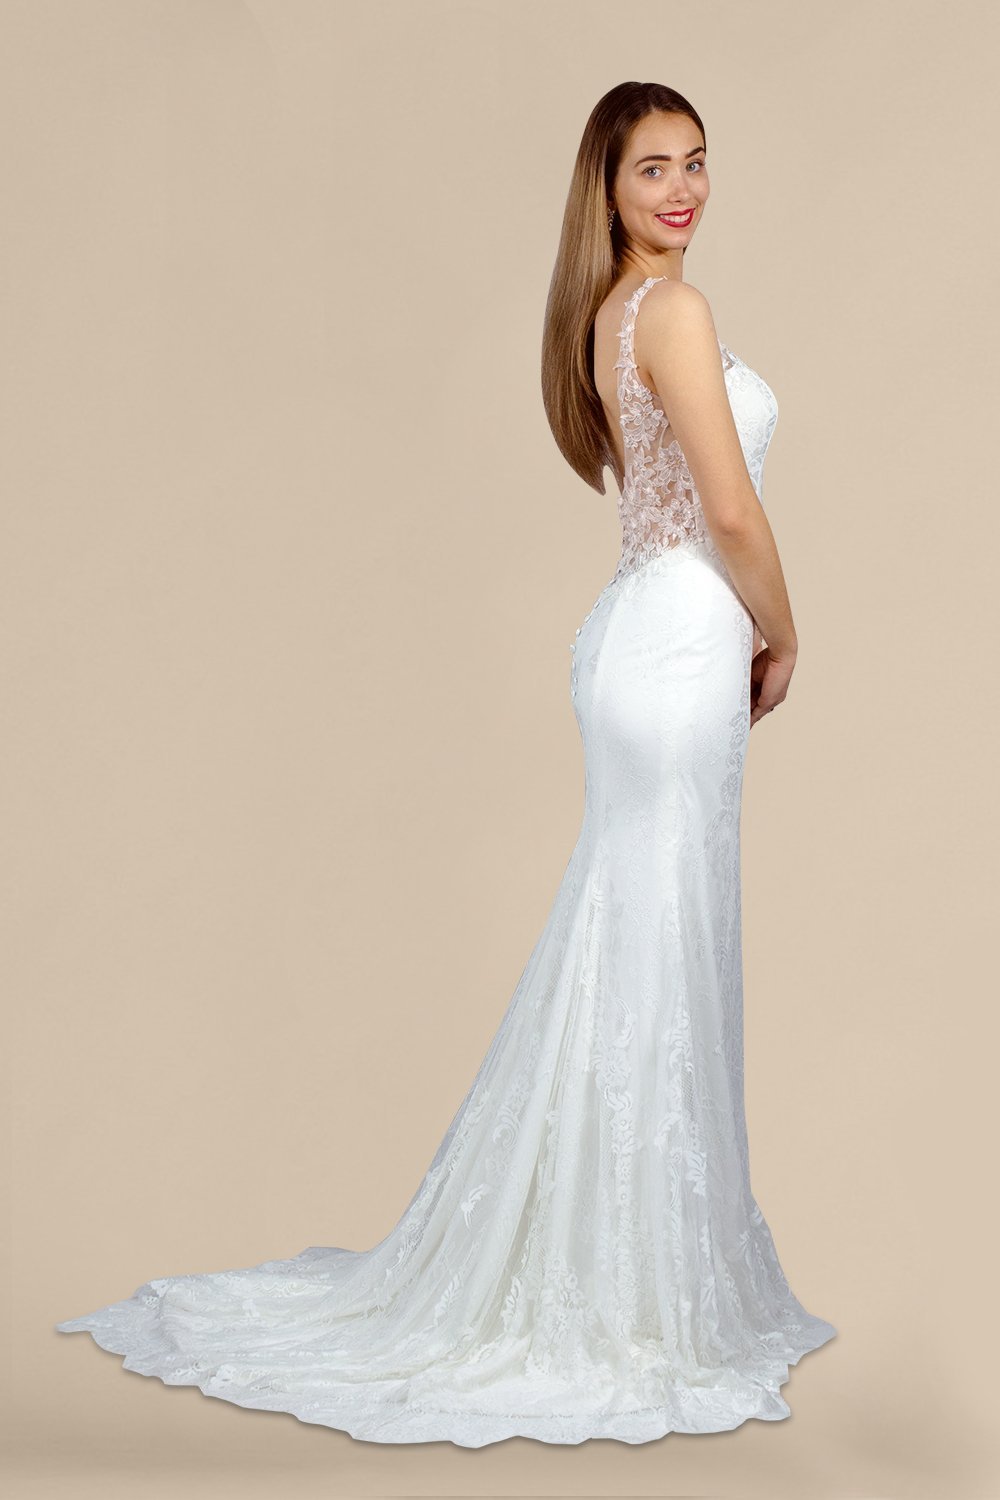 custom dressmaker beach lace wedding gowns perth australia envious bridal & formal